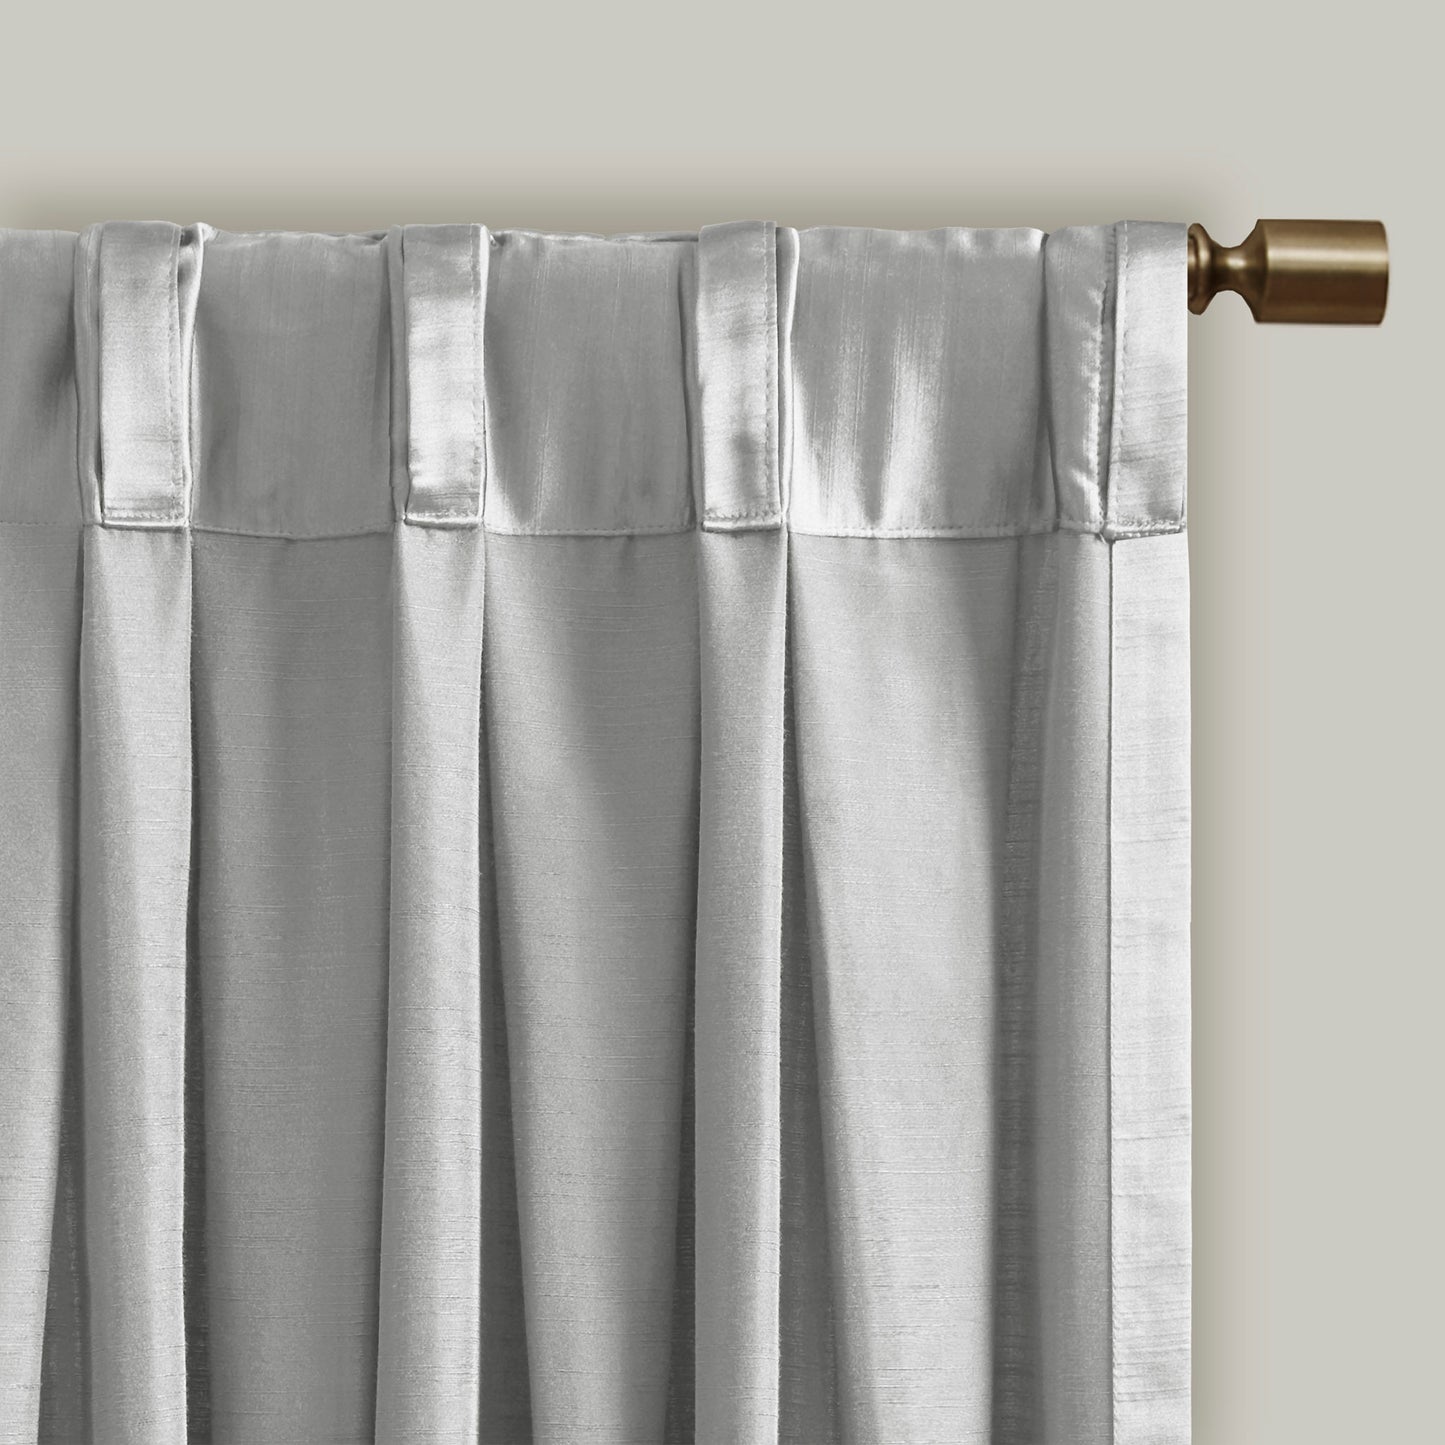 Pleat Curtain Panel with Tieback (Single)